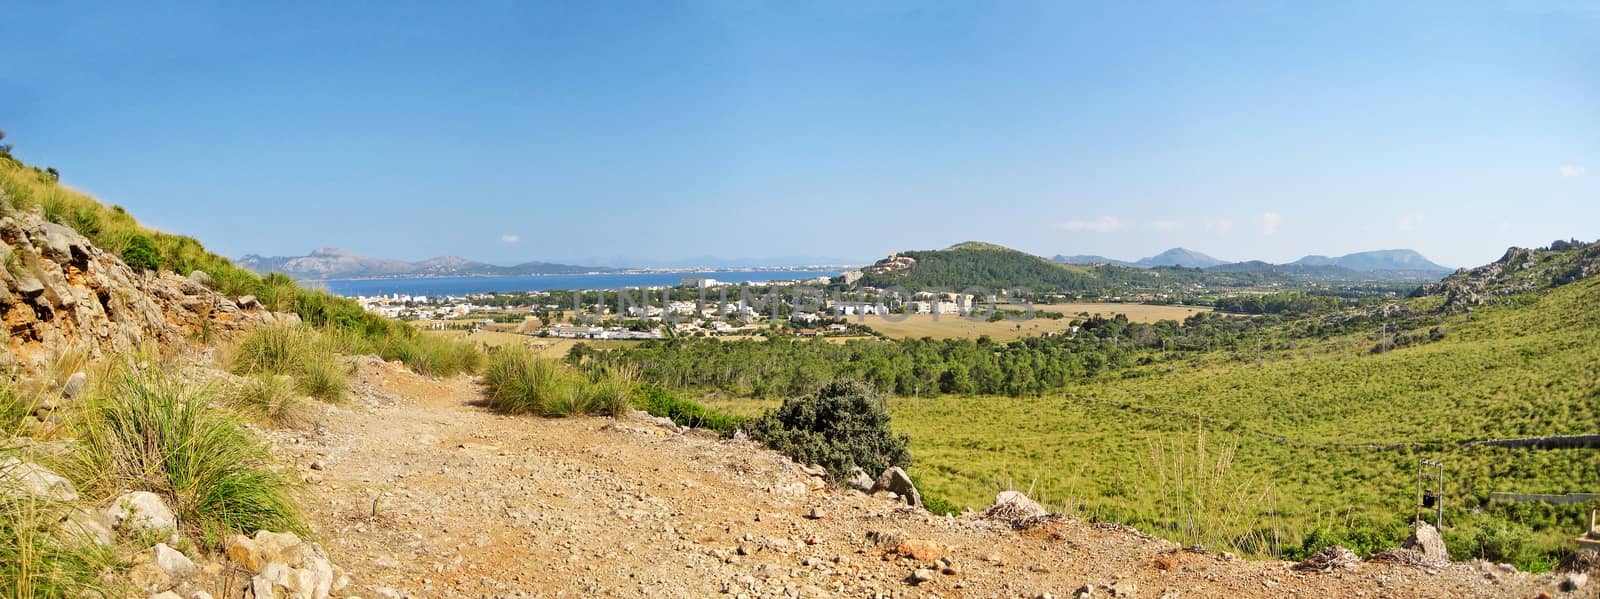 Bay of Pollenca, Majorca - landscape panorama